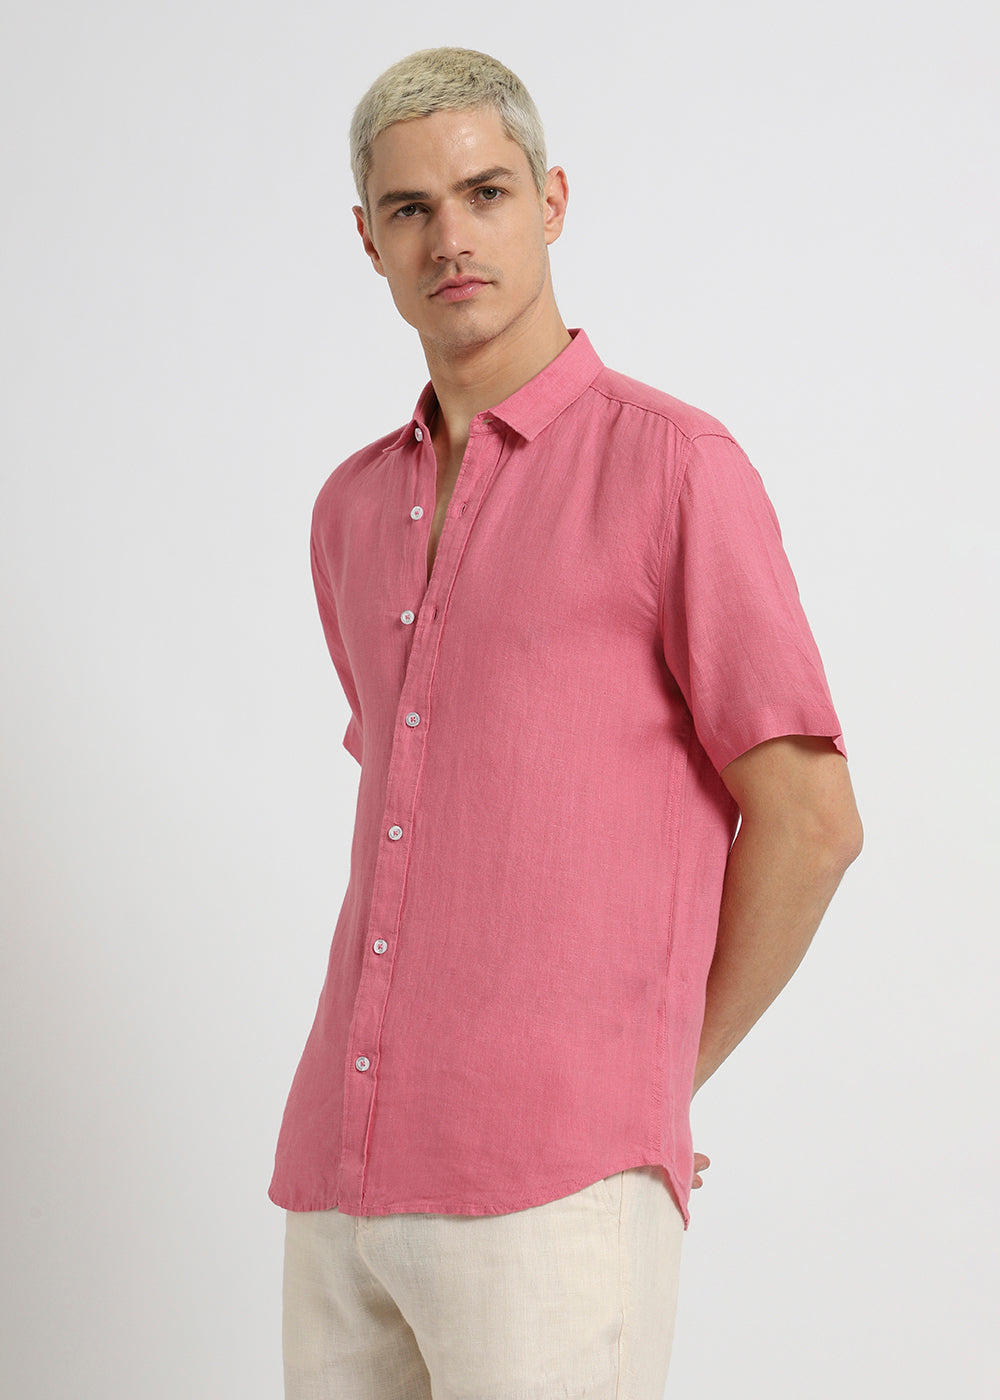 Fandango Pink Pure Irish Linen Shirt